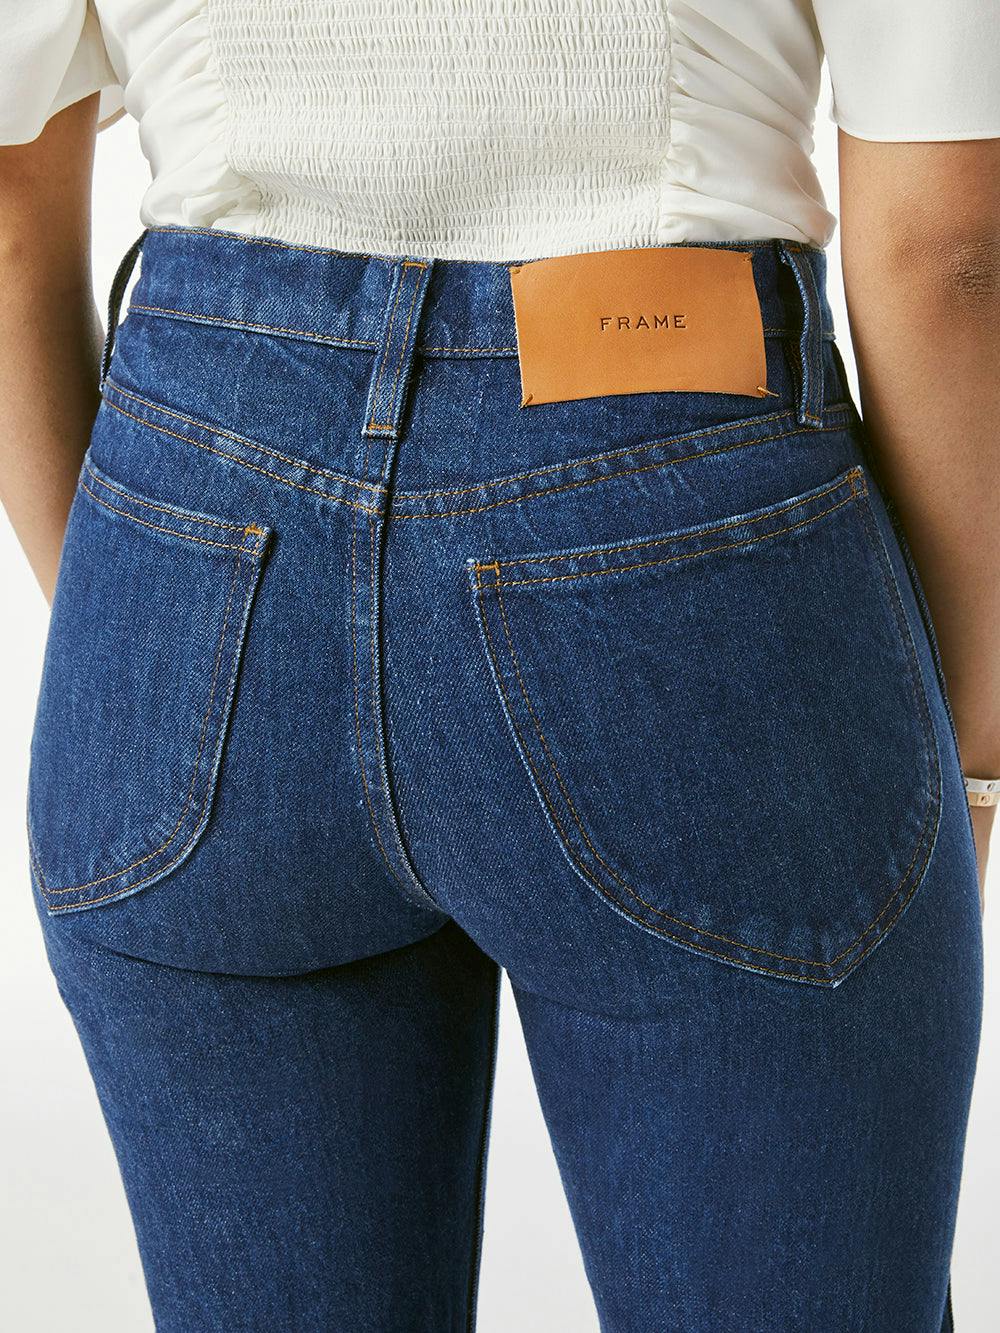 jeans detail view alt:hover